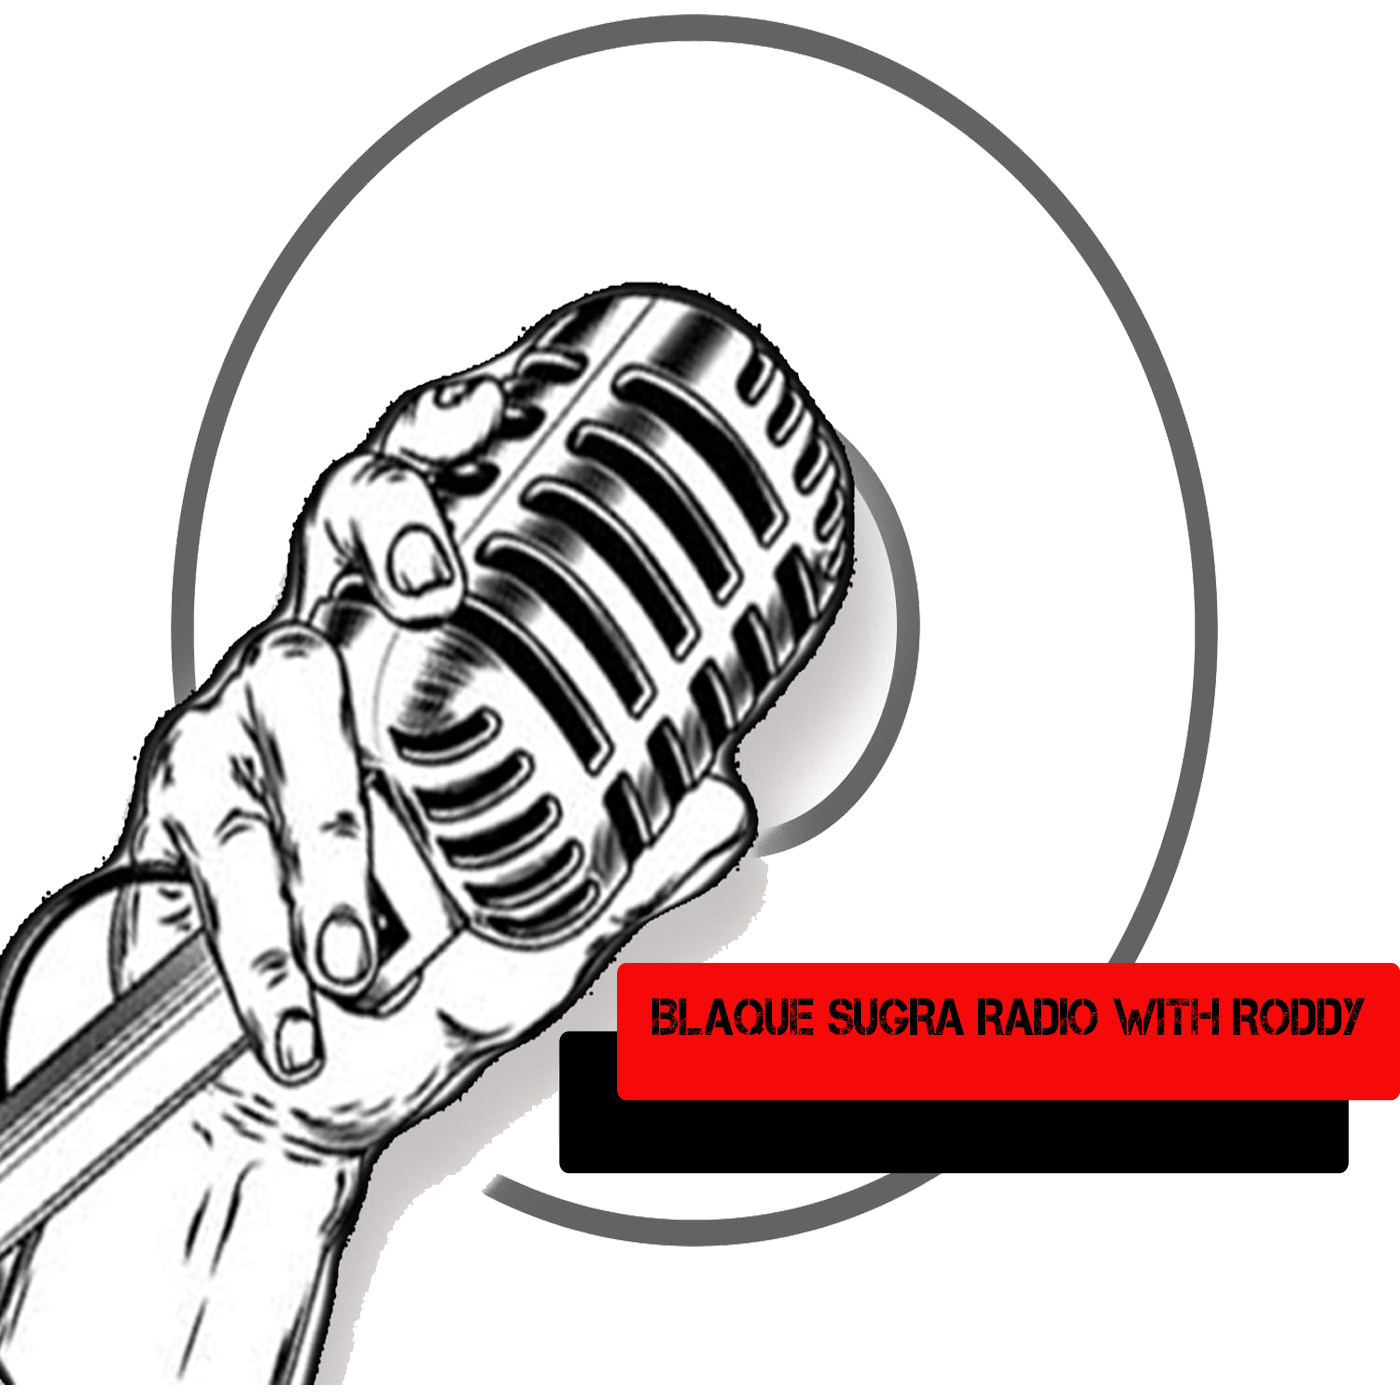 Blaque Sugra Radio with Roddy post thumbnail image